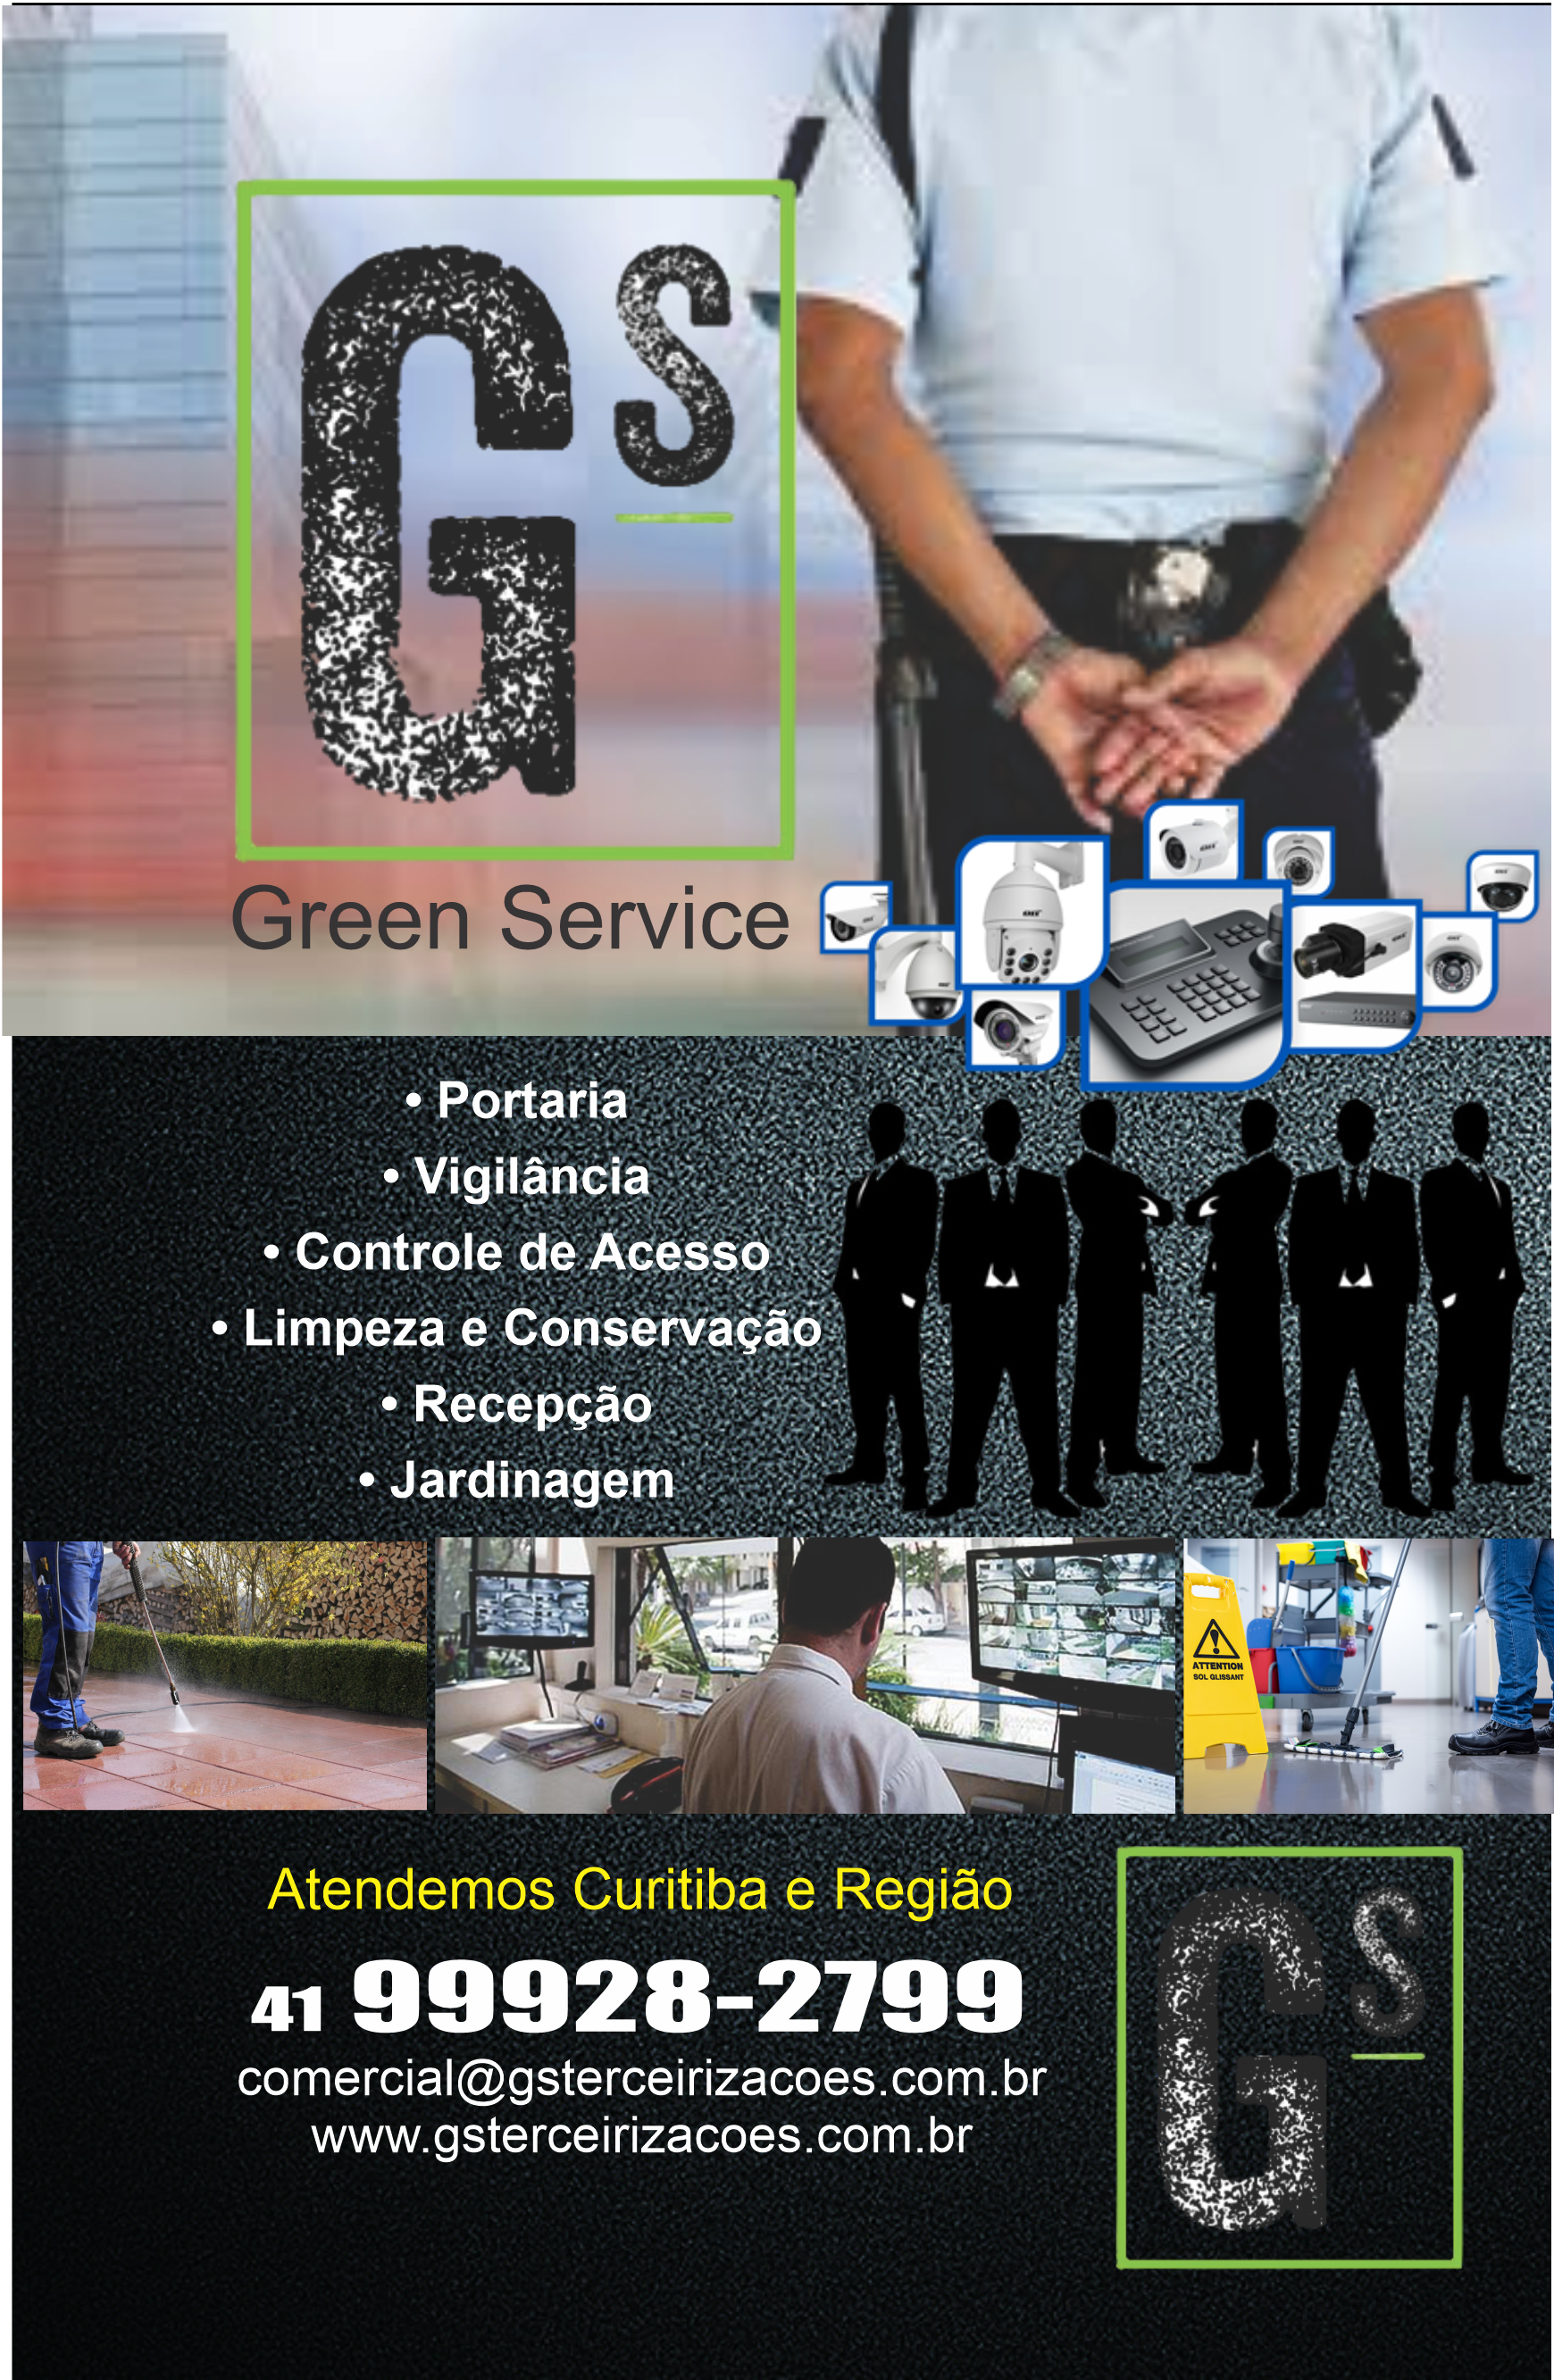 GS Green Service      Fones: (41) 99928-2799 